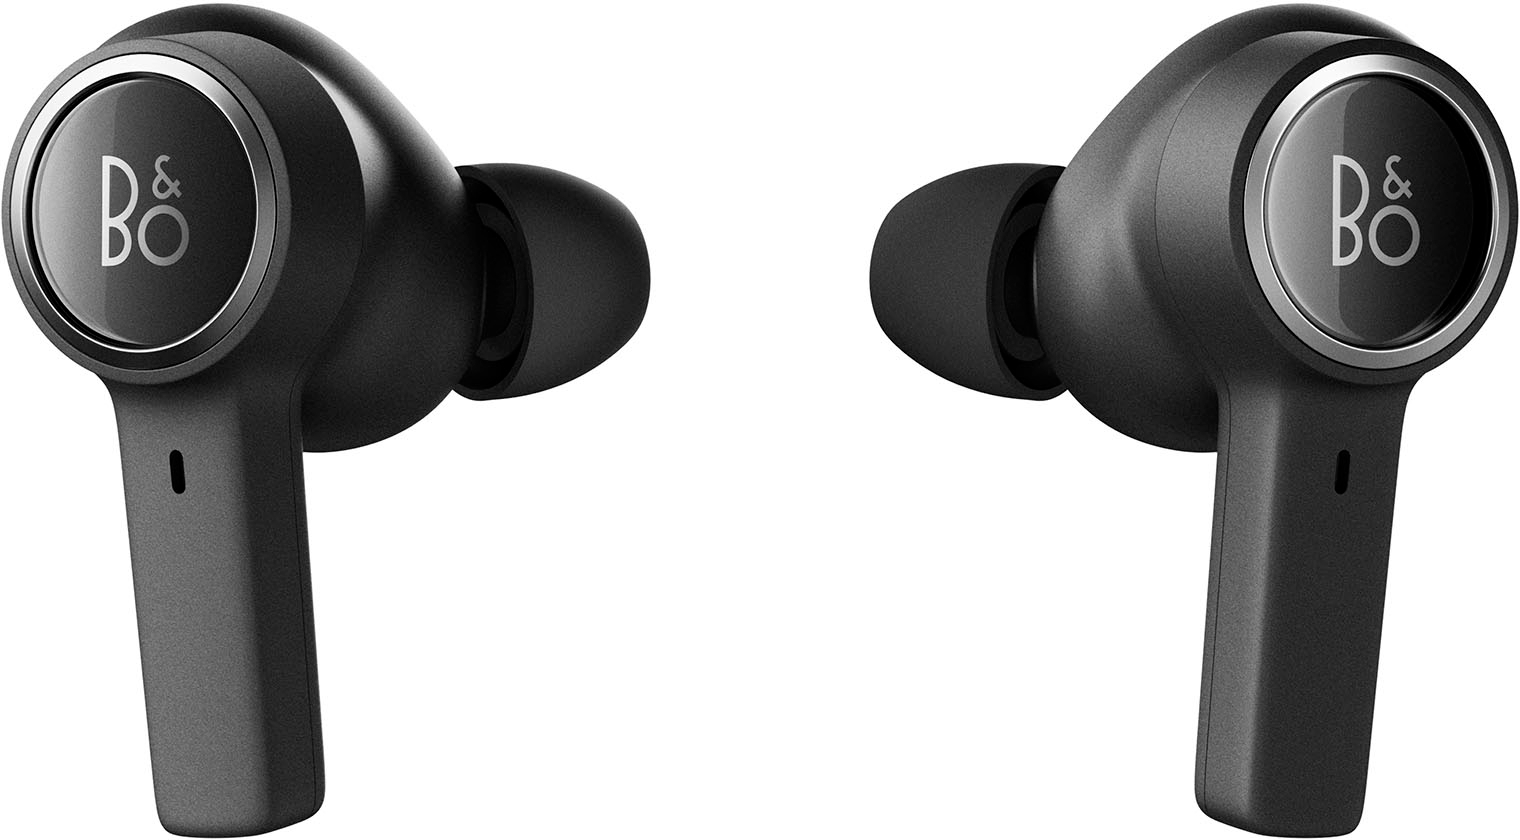 Bang & Olufsen Beoplay EX Next-gen Wireless Earbuds Black 56938BBR